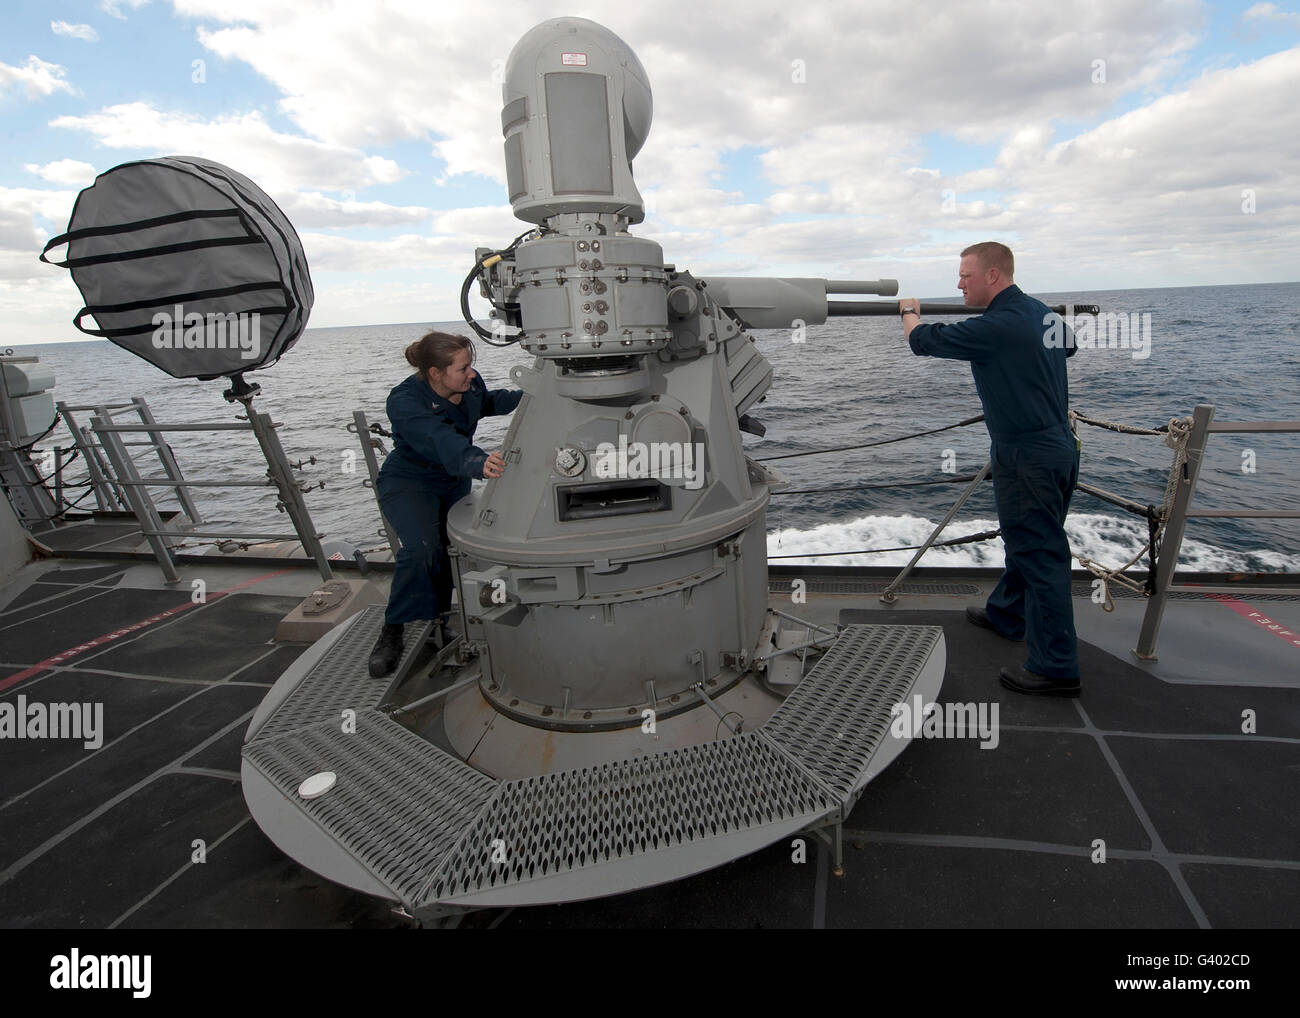 Sailors conduct maintenance on the MK38 MOD-2 25mm machine gun system. Stock Photo